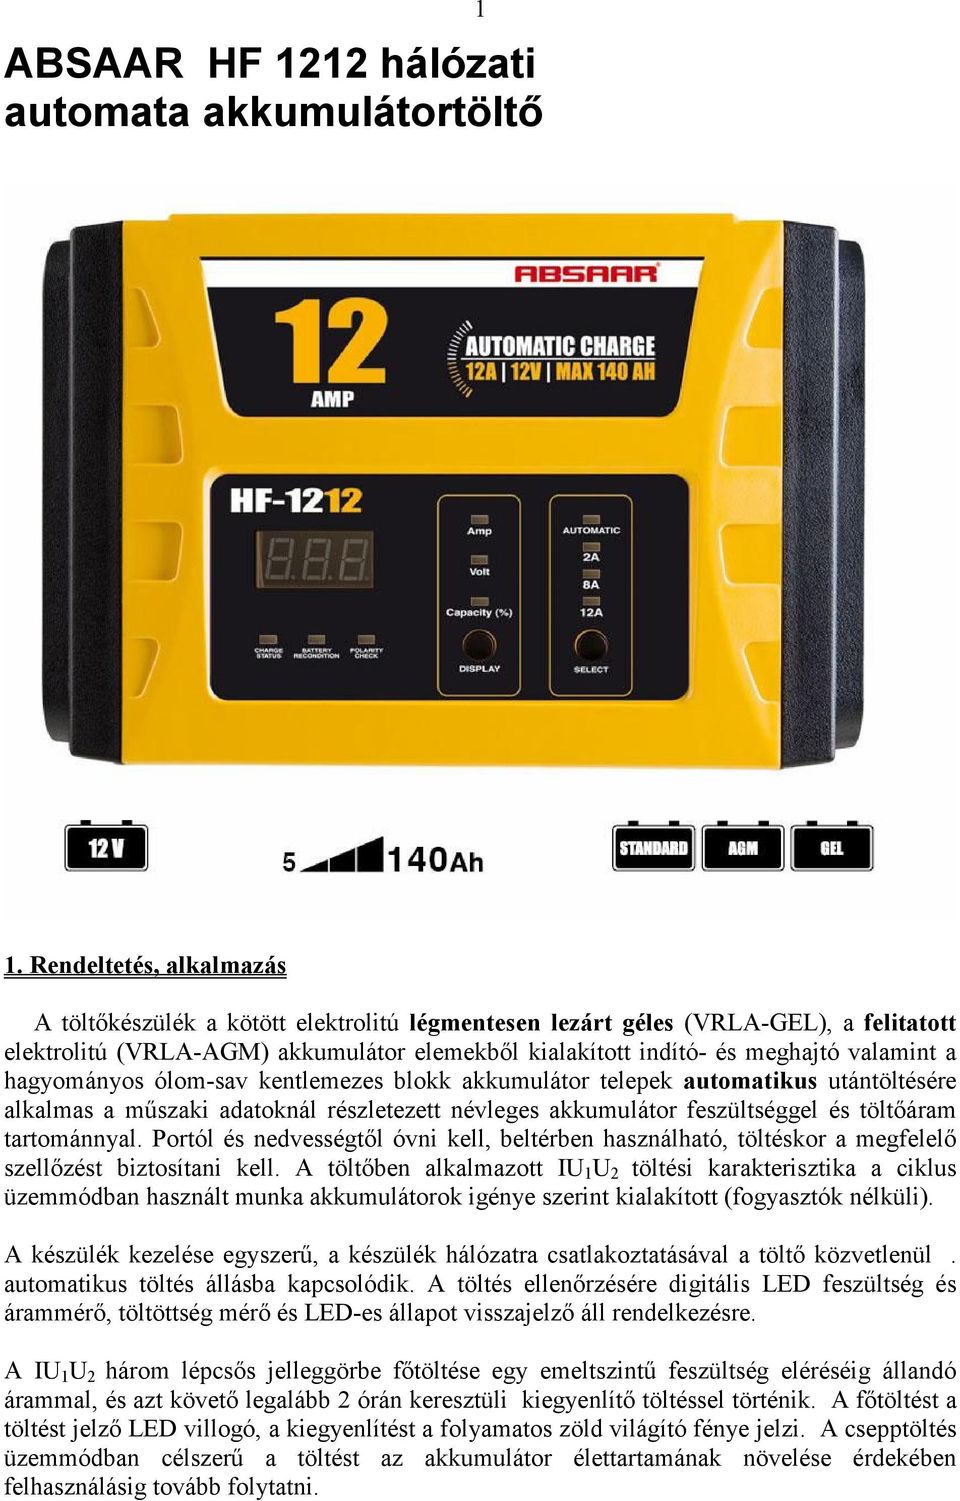 ABSAAR HF 1212 hálózati automata akkumulátortöltı - PDF Free Download